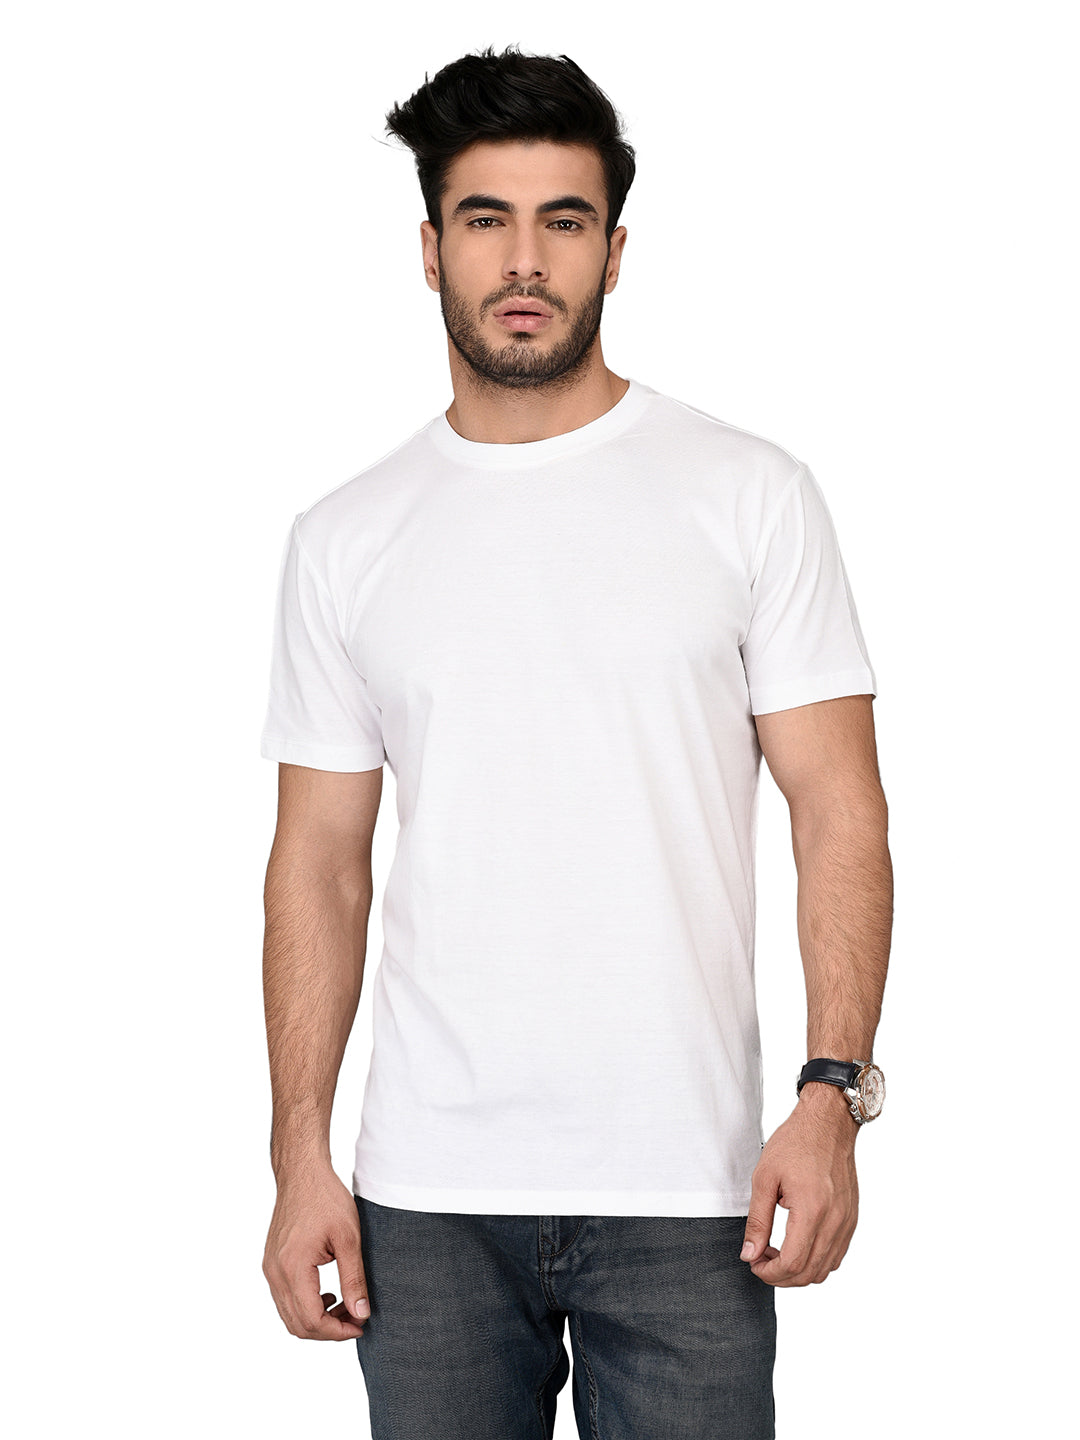 JadeBlue White Slim Fit  Round Neck T-Shirt | JadeBlue